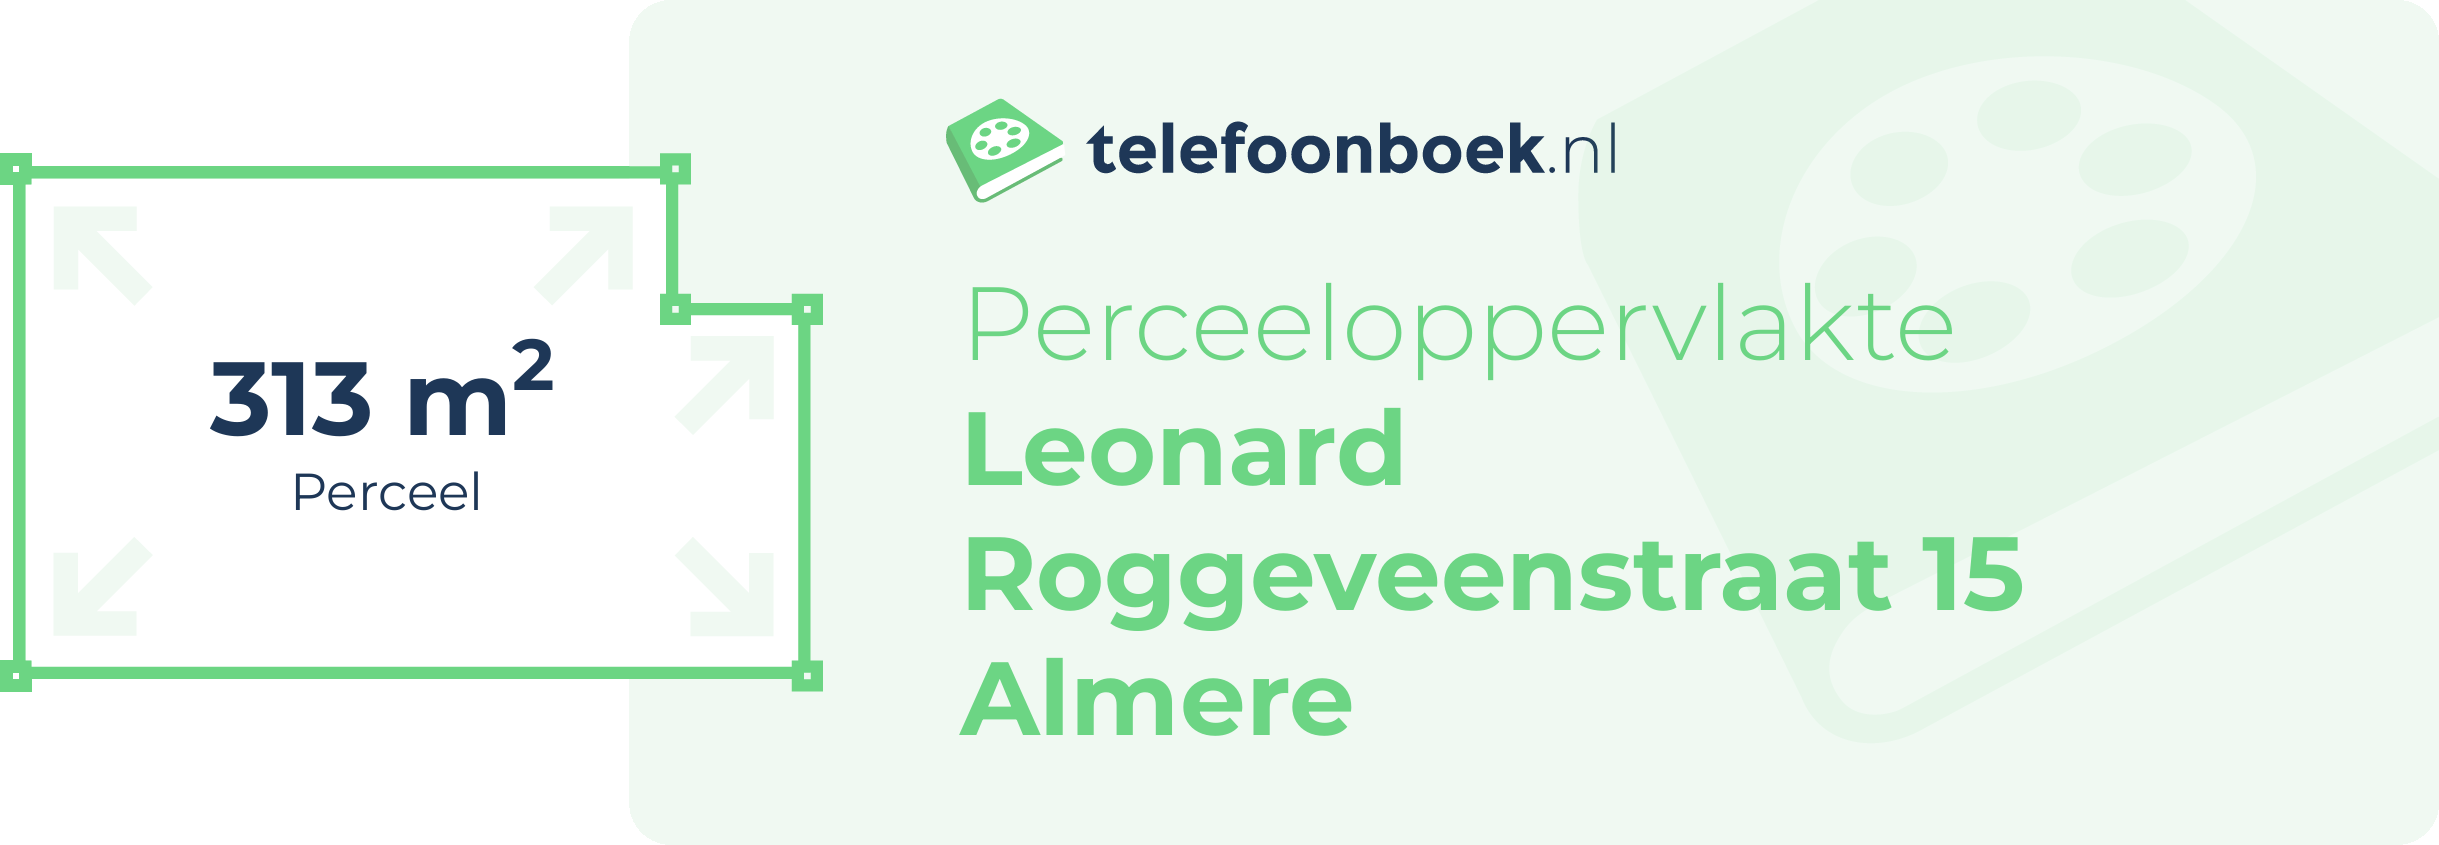 Perceeloppervlakte Leonard Roggeveenstraat 15 Almere